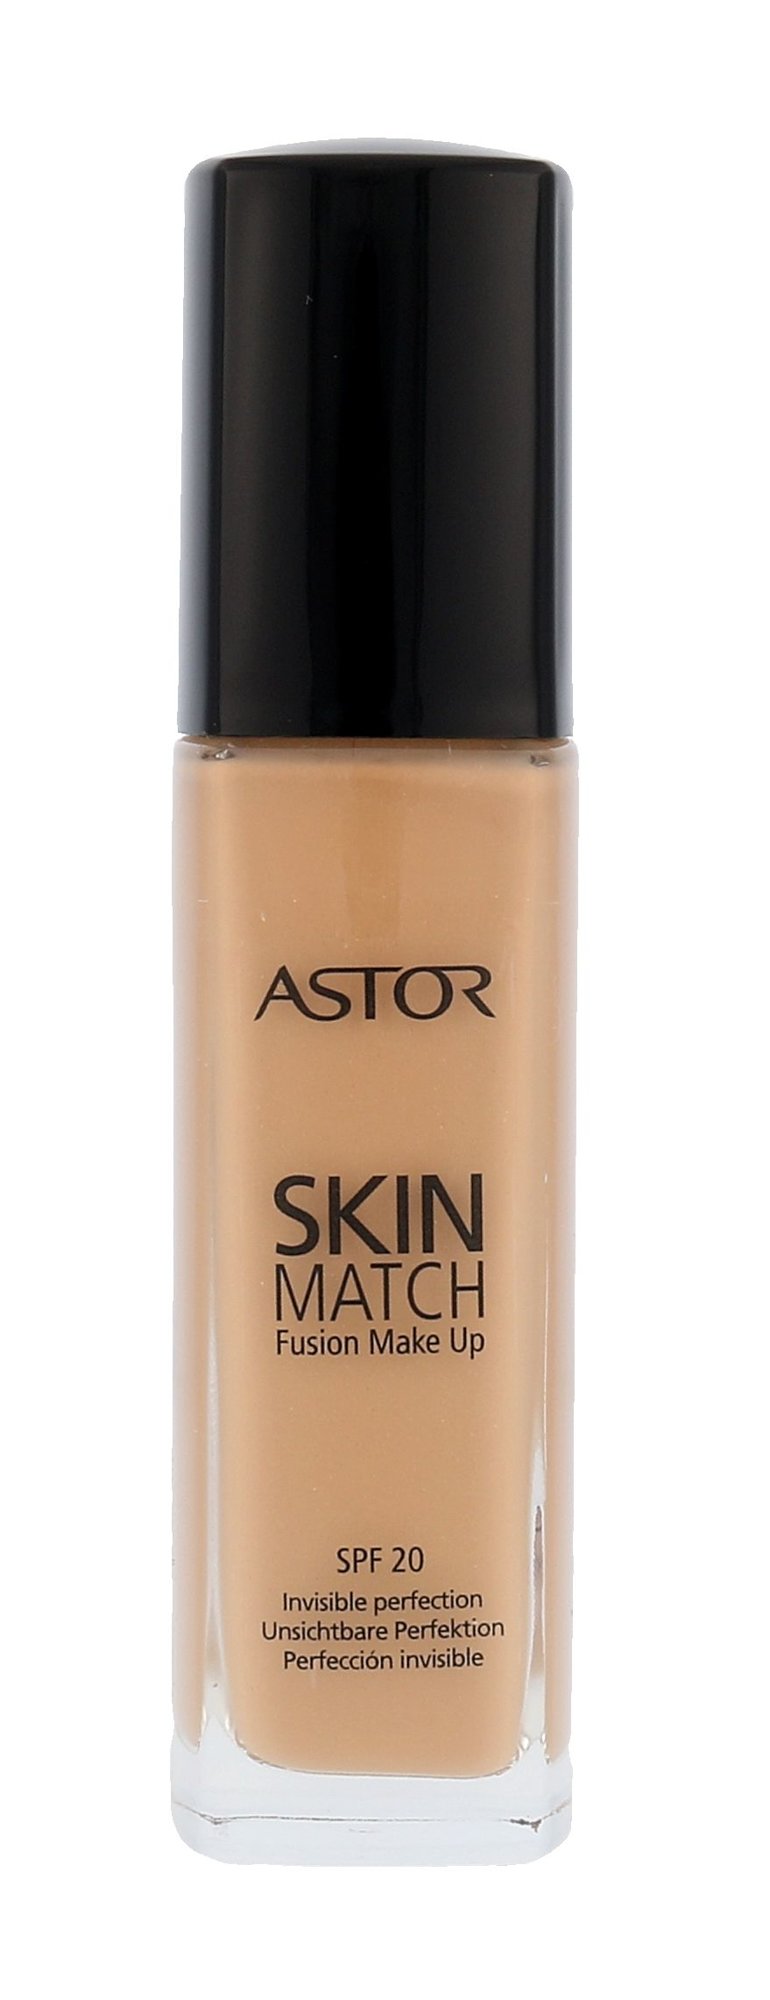 Astor Skin Match Fusion Make Up SPF20